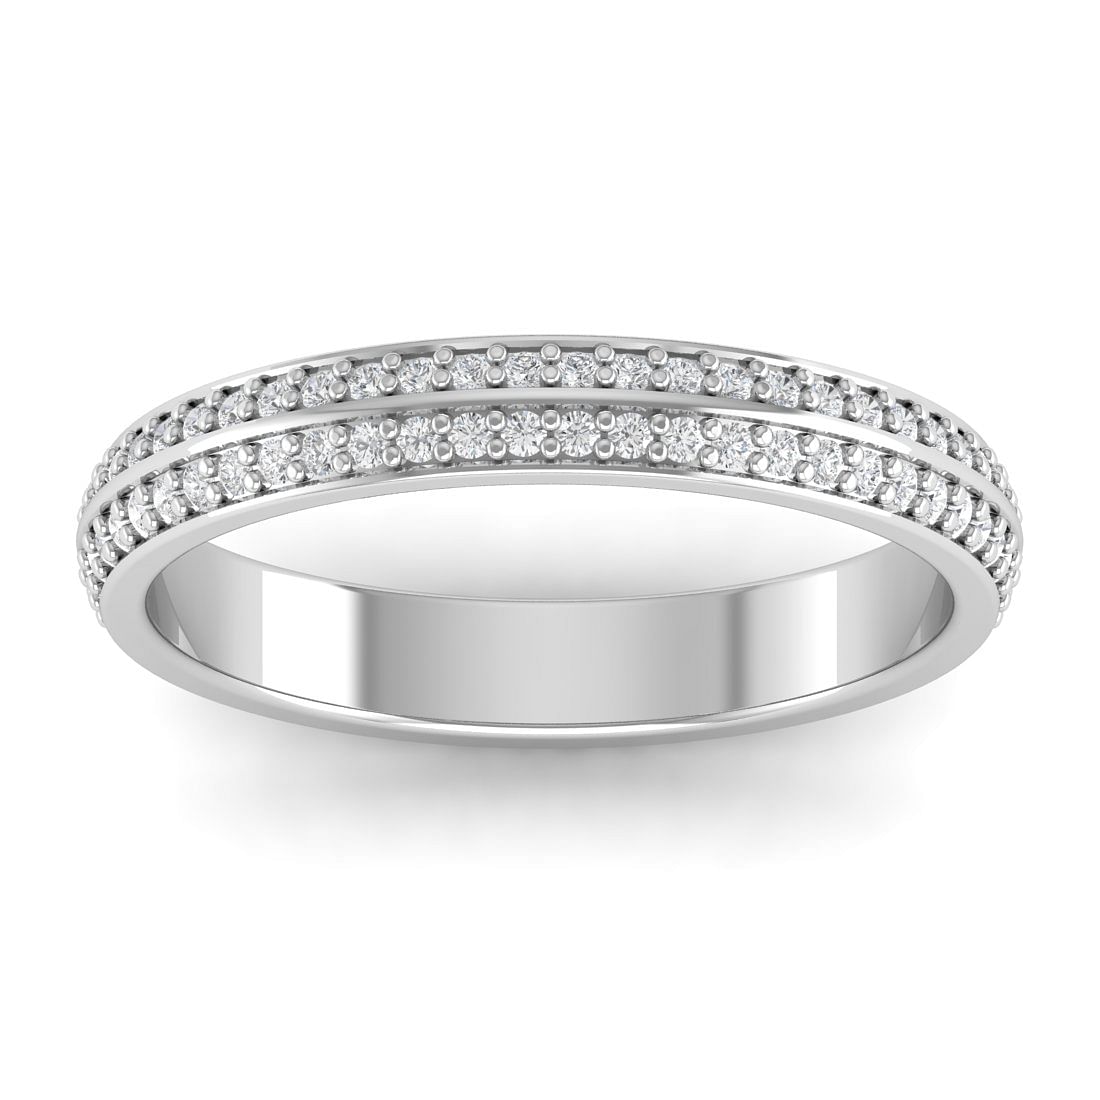 Double Diamond White Gold Wedding Ring Band For Women